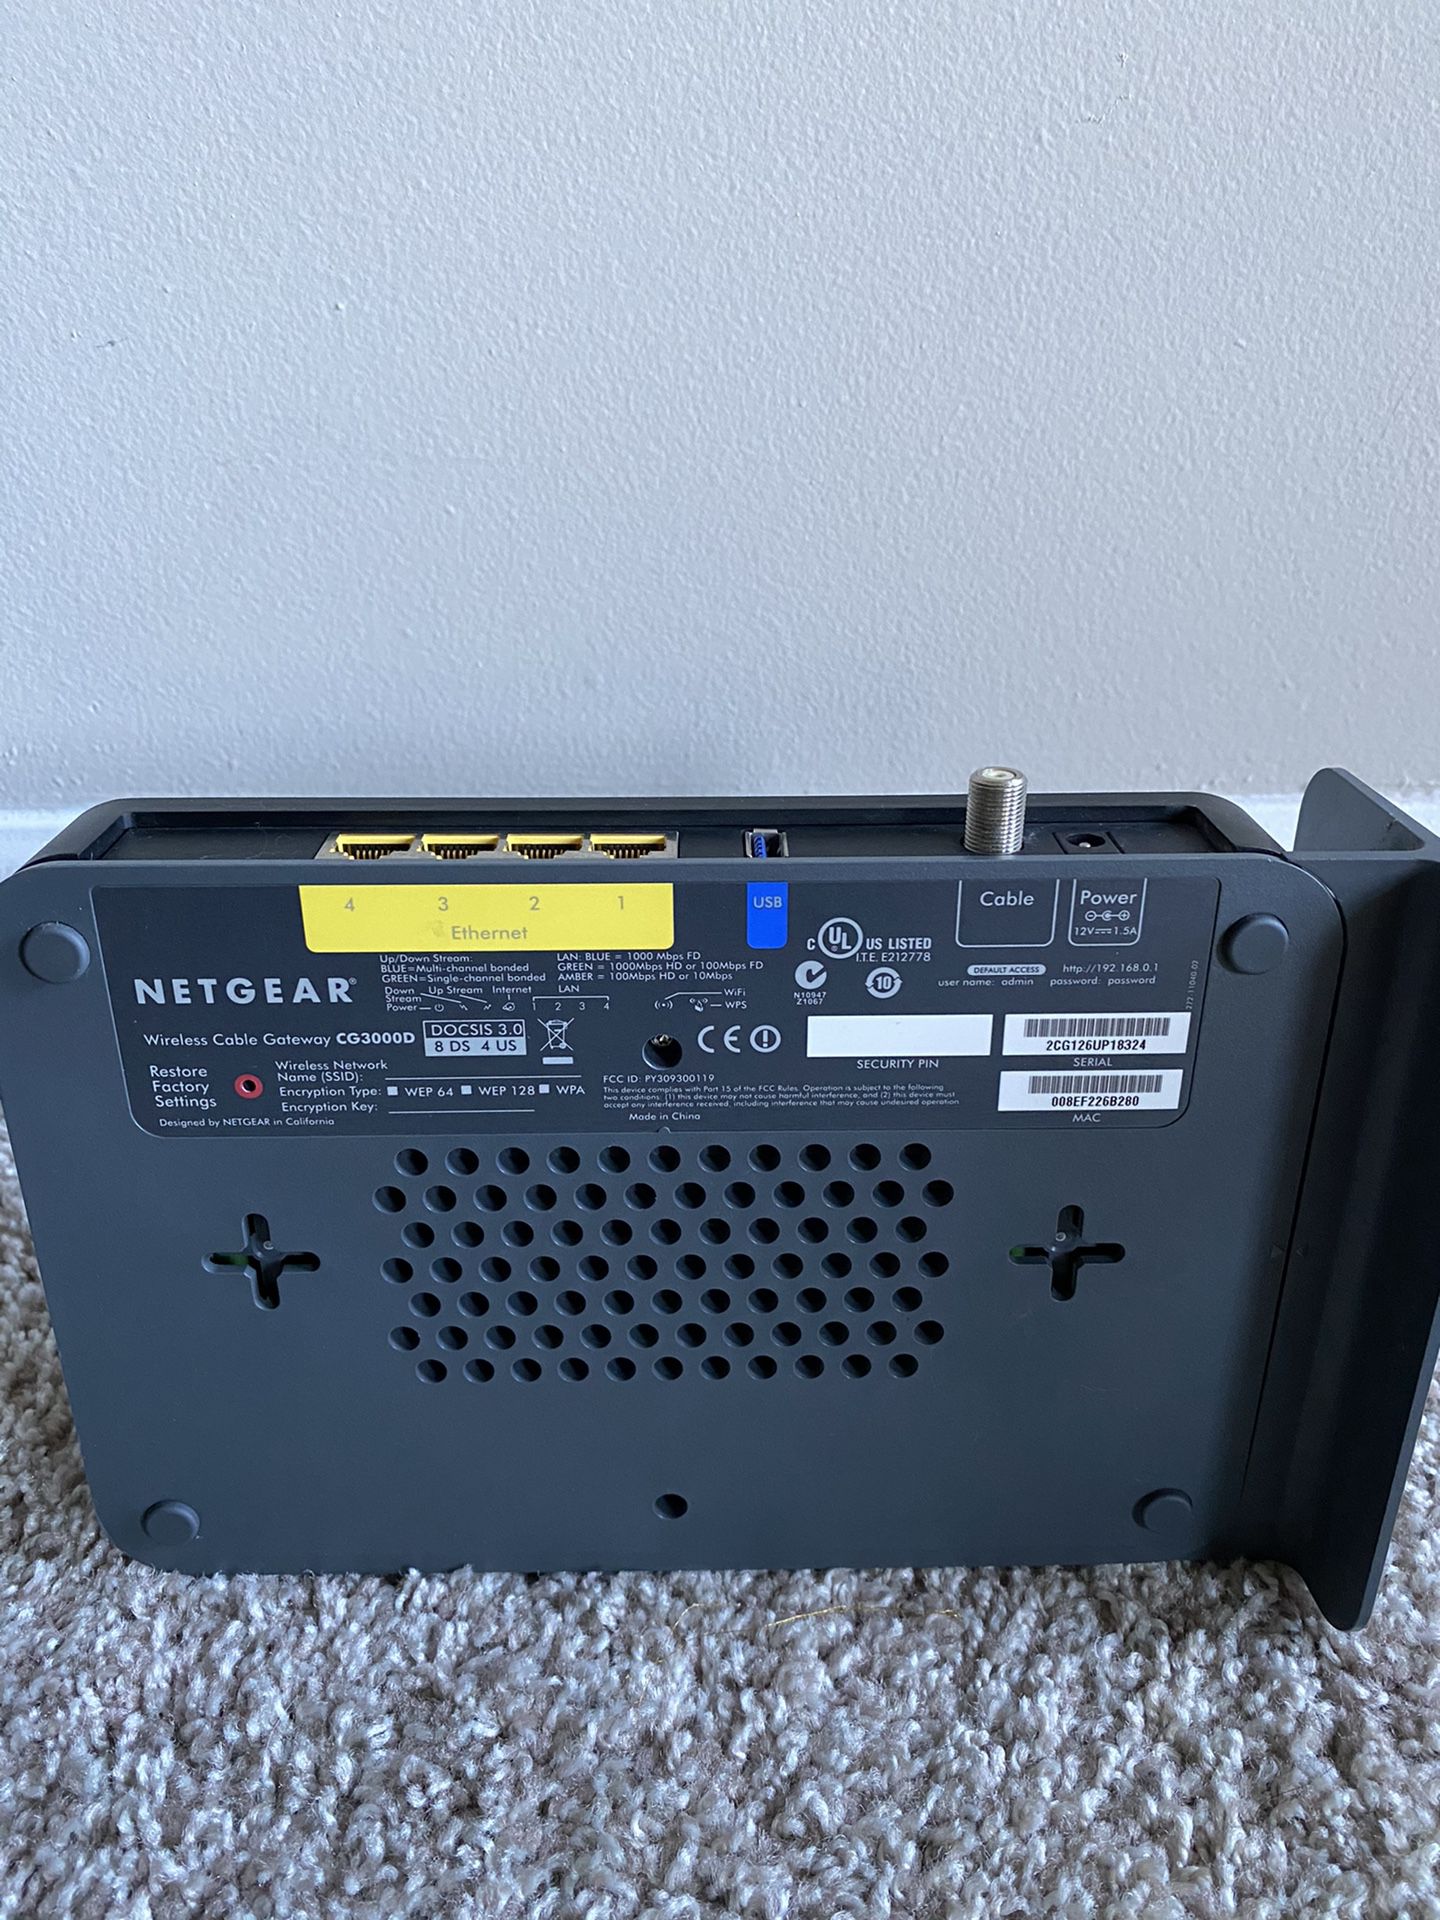 Netgear CG3000D wireless cable gateway for sale!